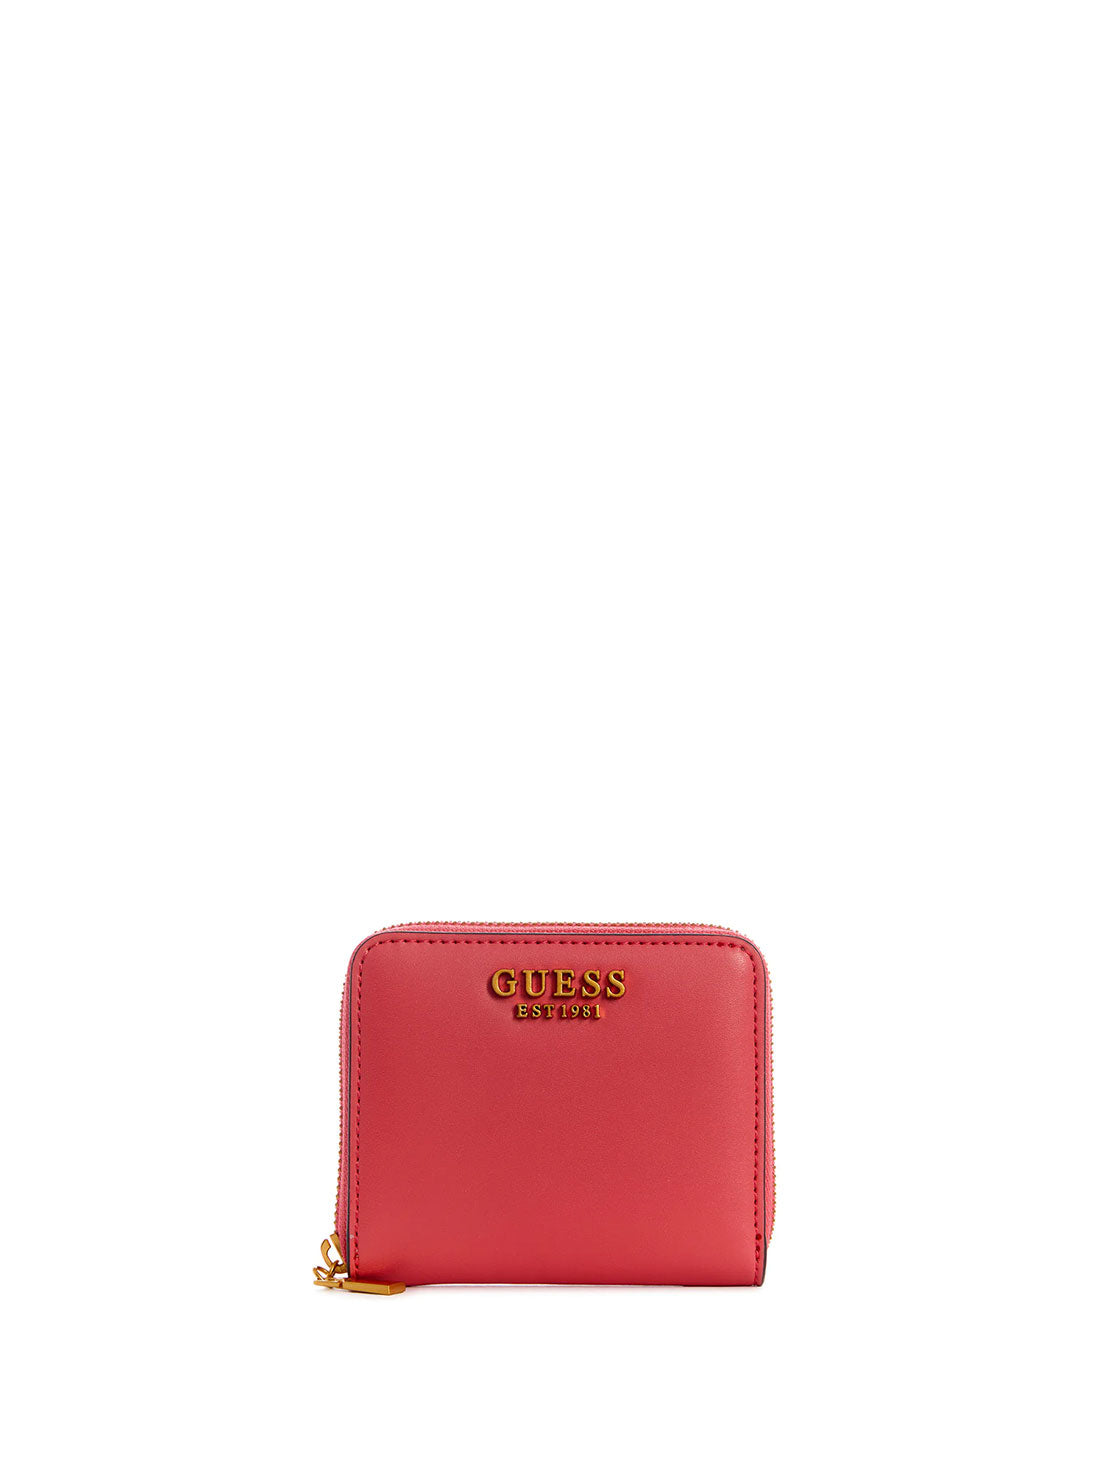 GUESS Womens  Red Laurel Small Zip Wallet VA850037 Front View